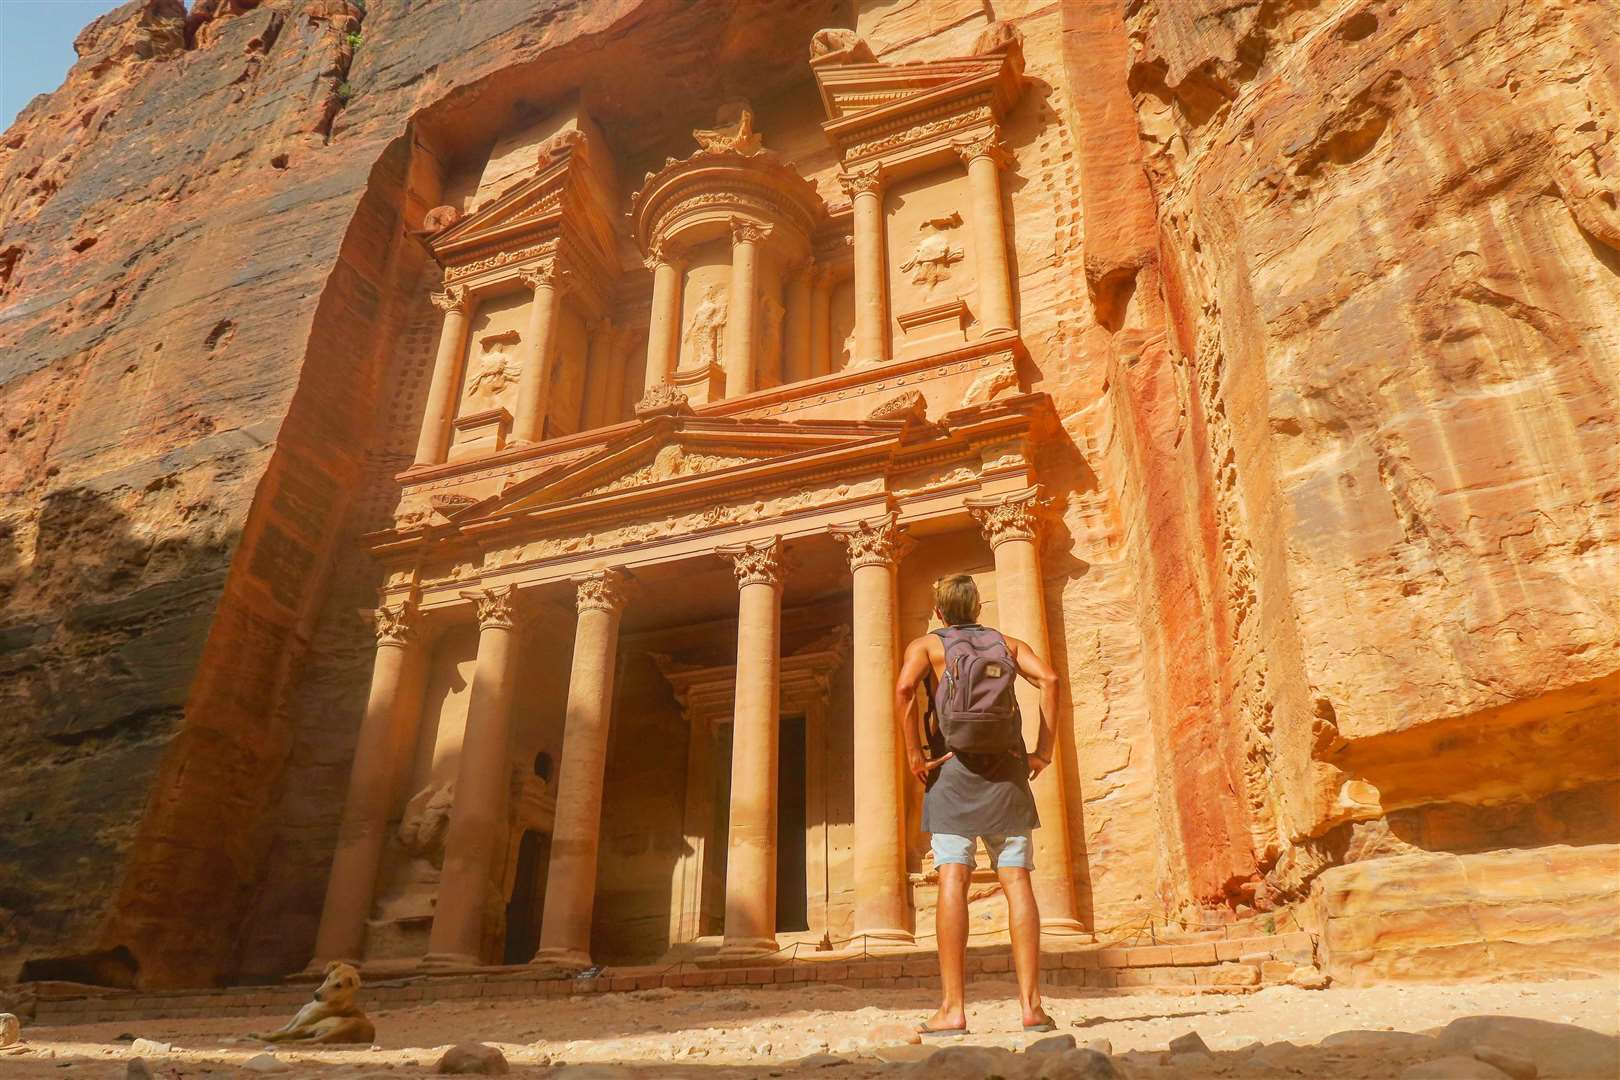 Mark visiting the temples in Petra, Jordan